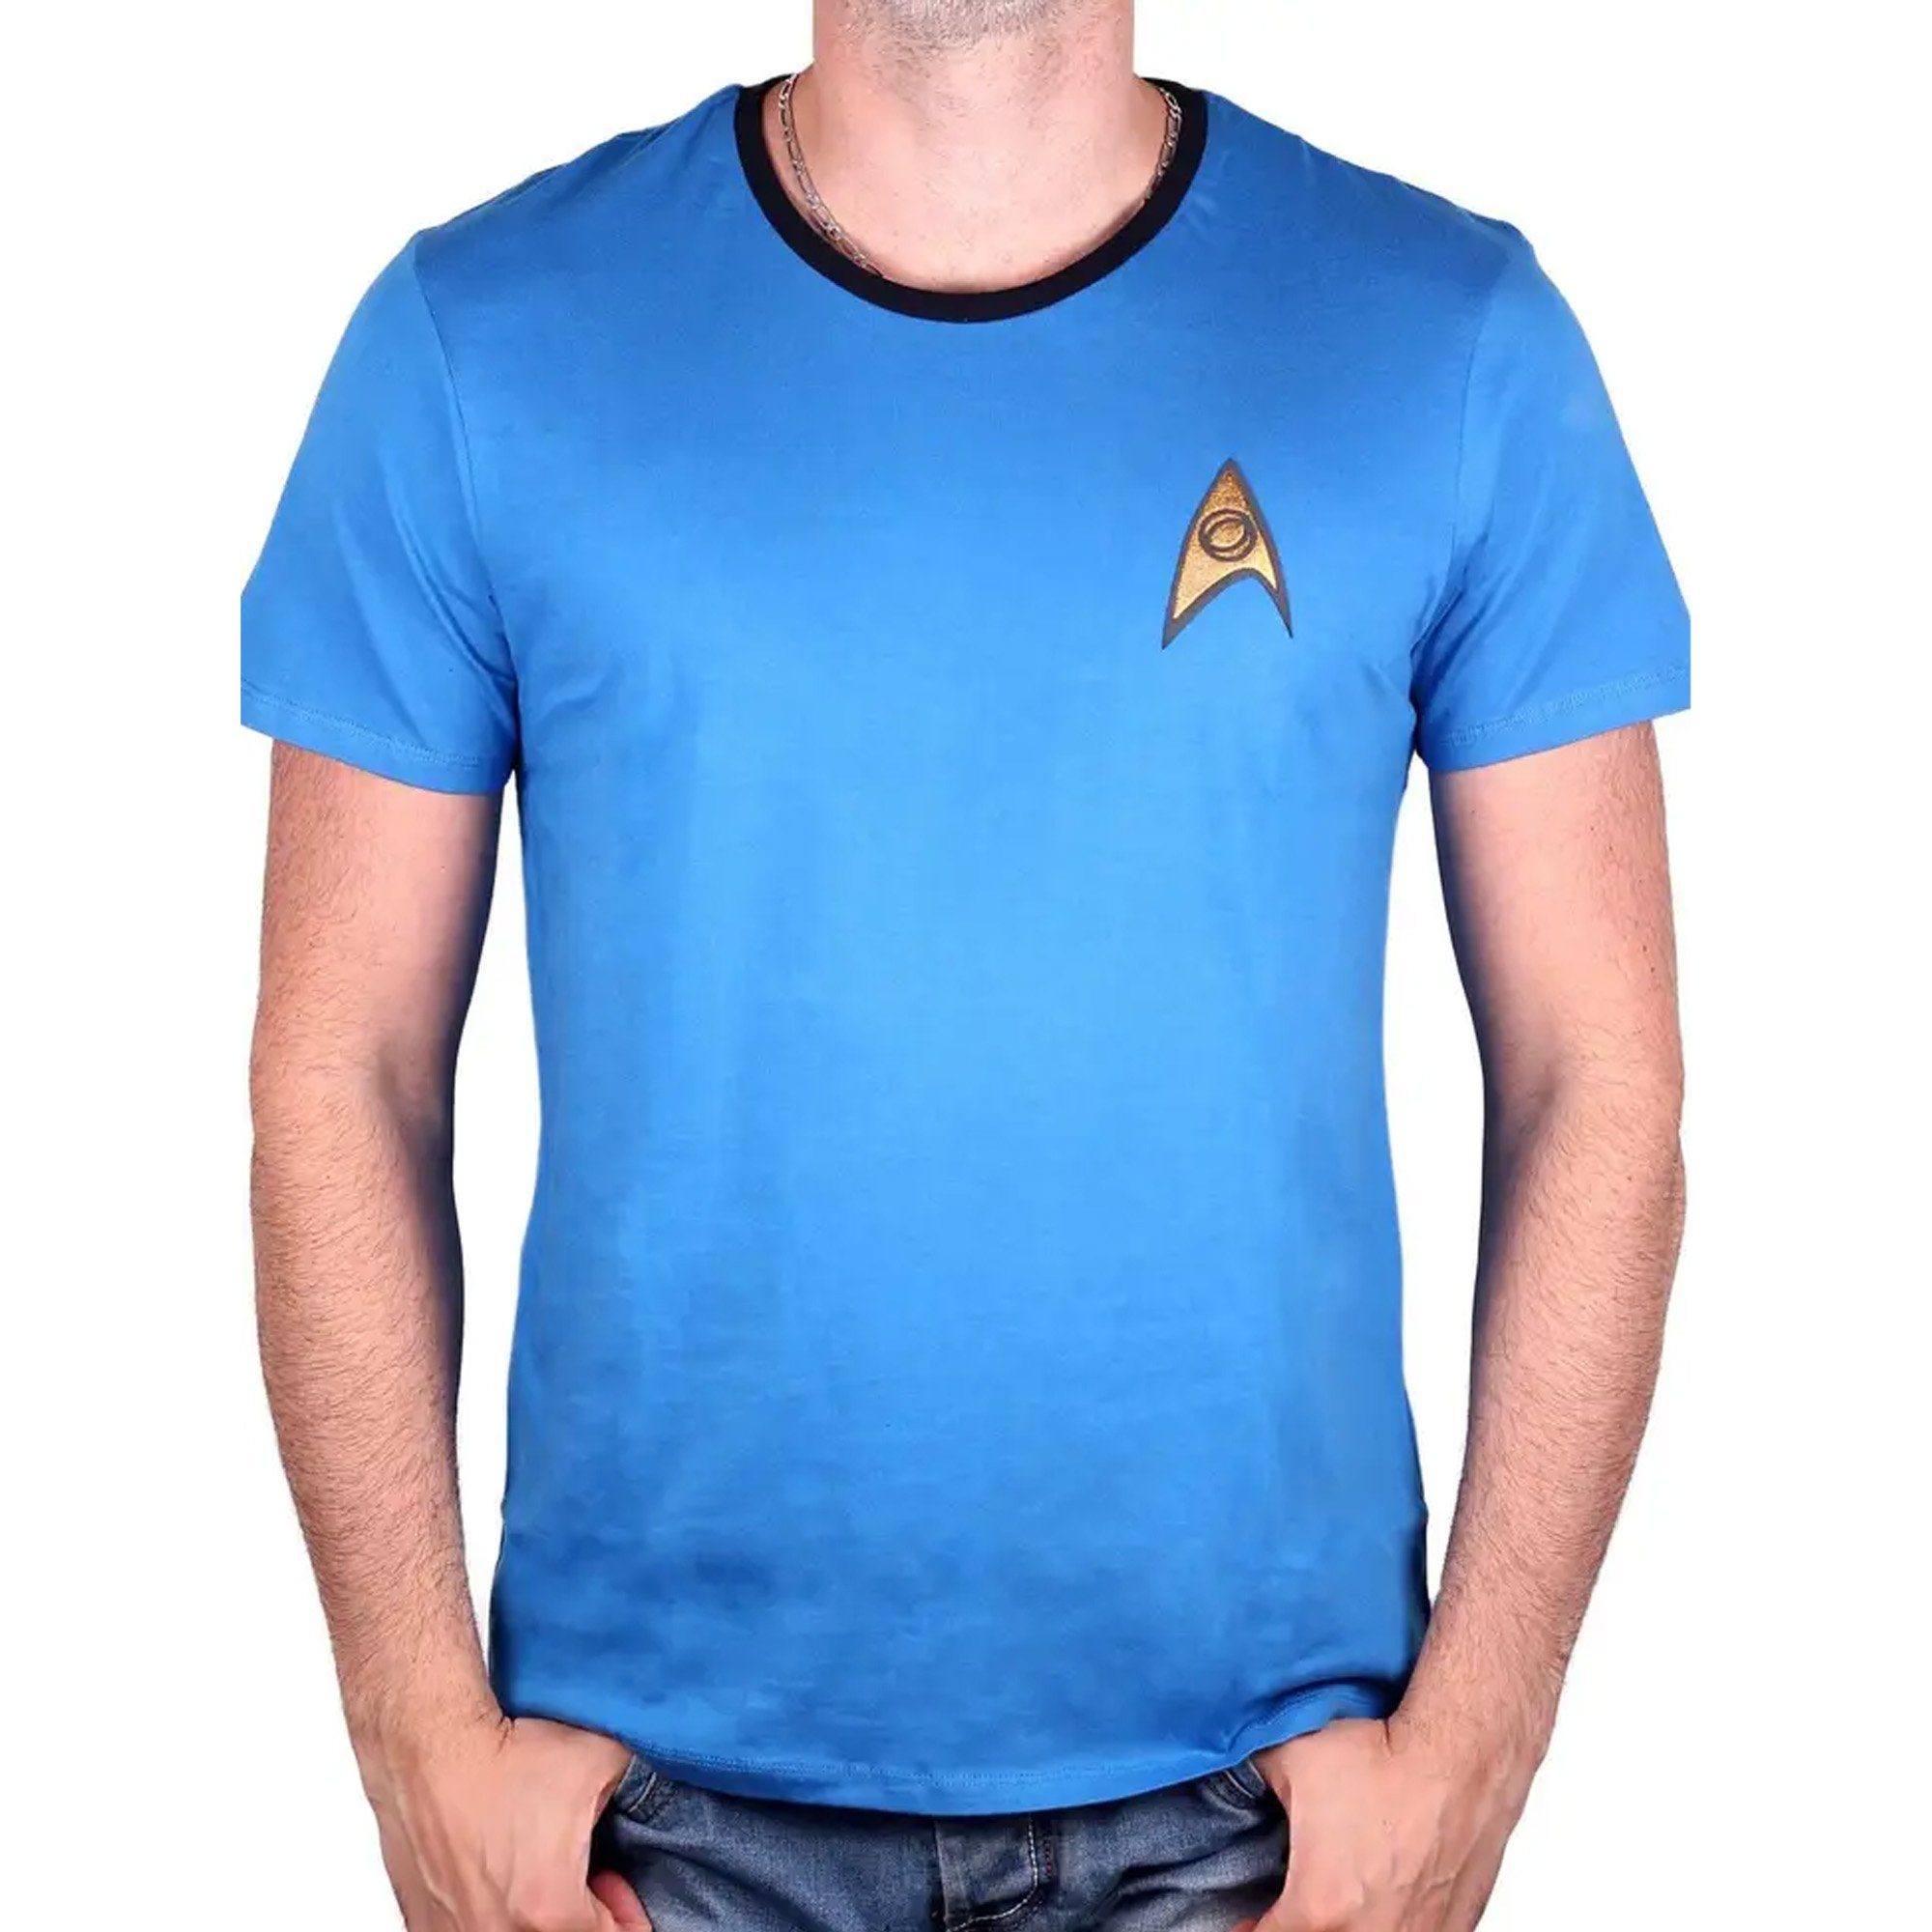 Cotton Division T-Shirt Spock Uniform blau - Star Trek